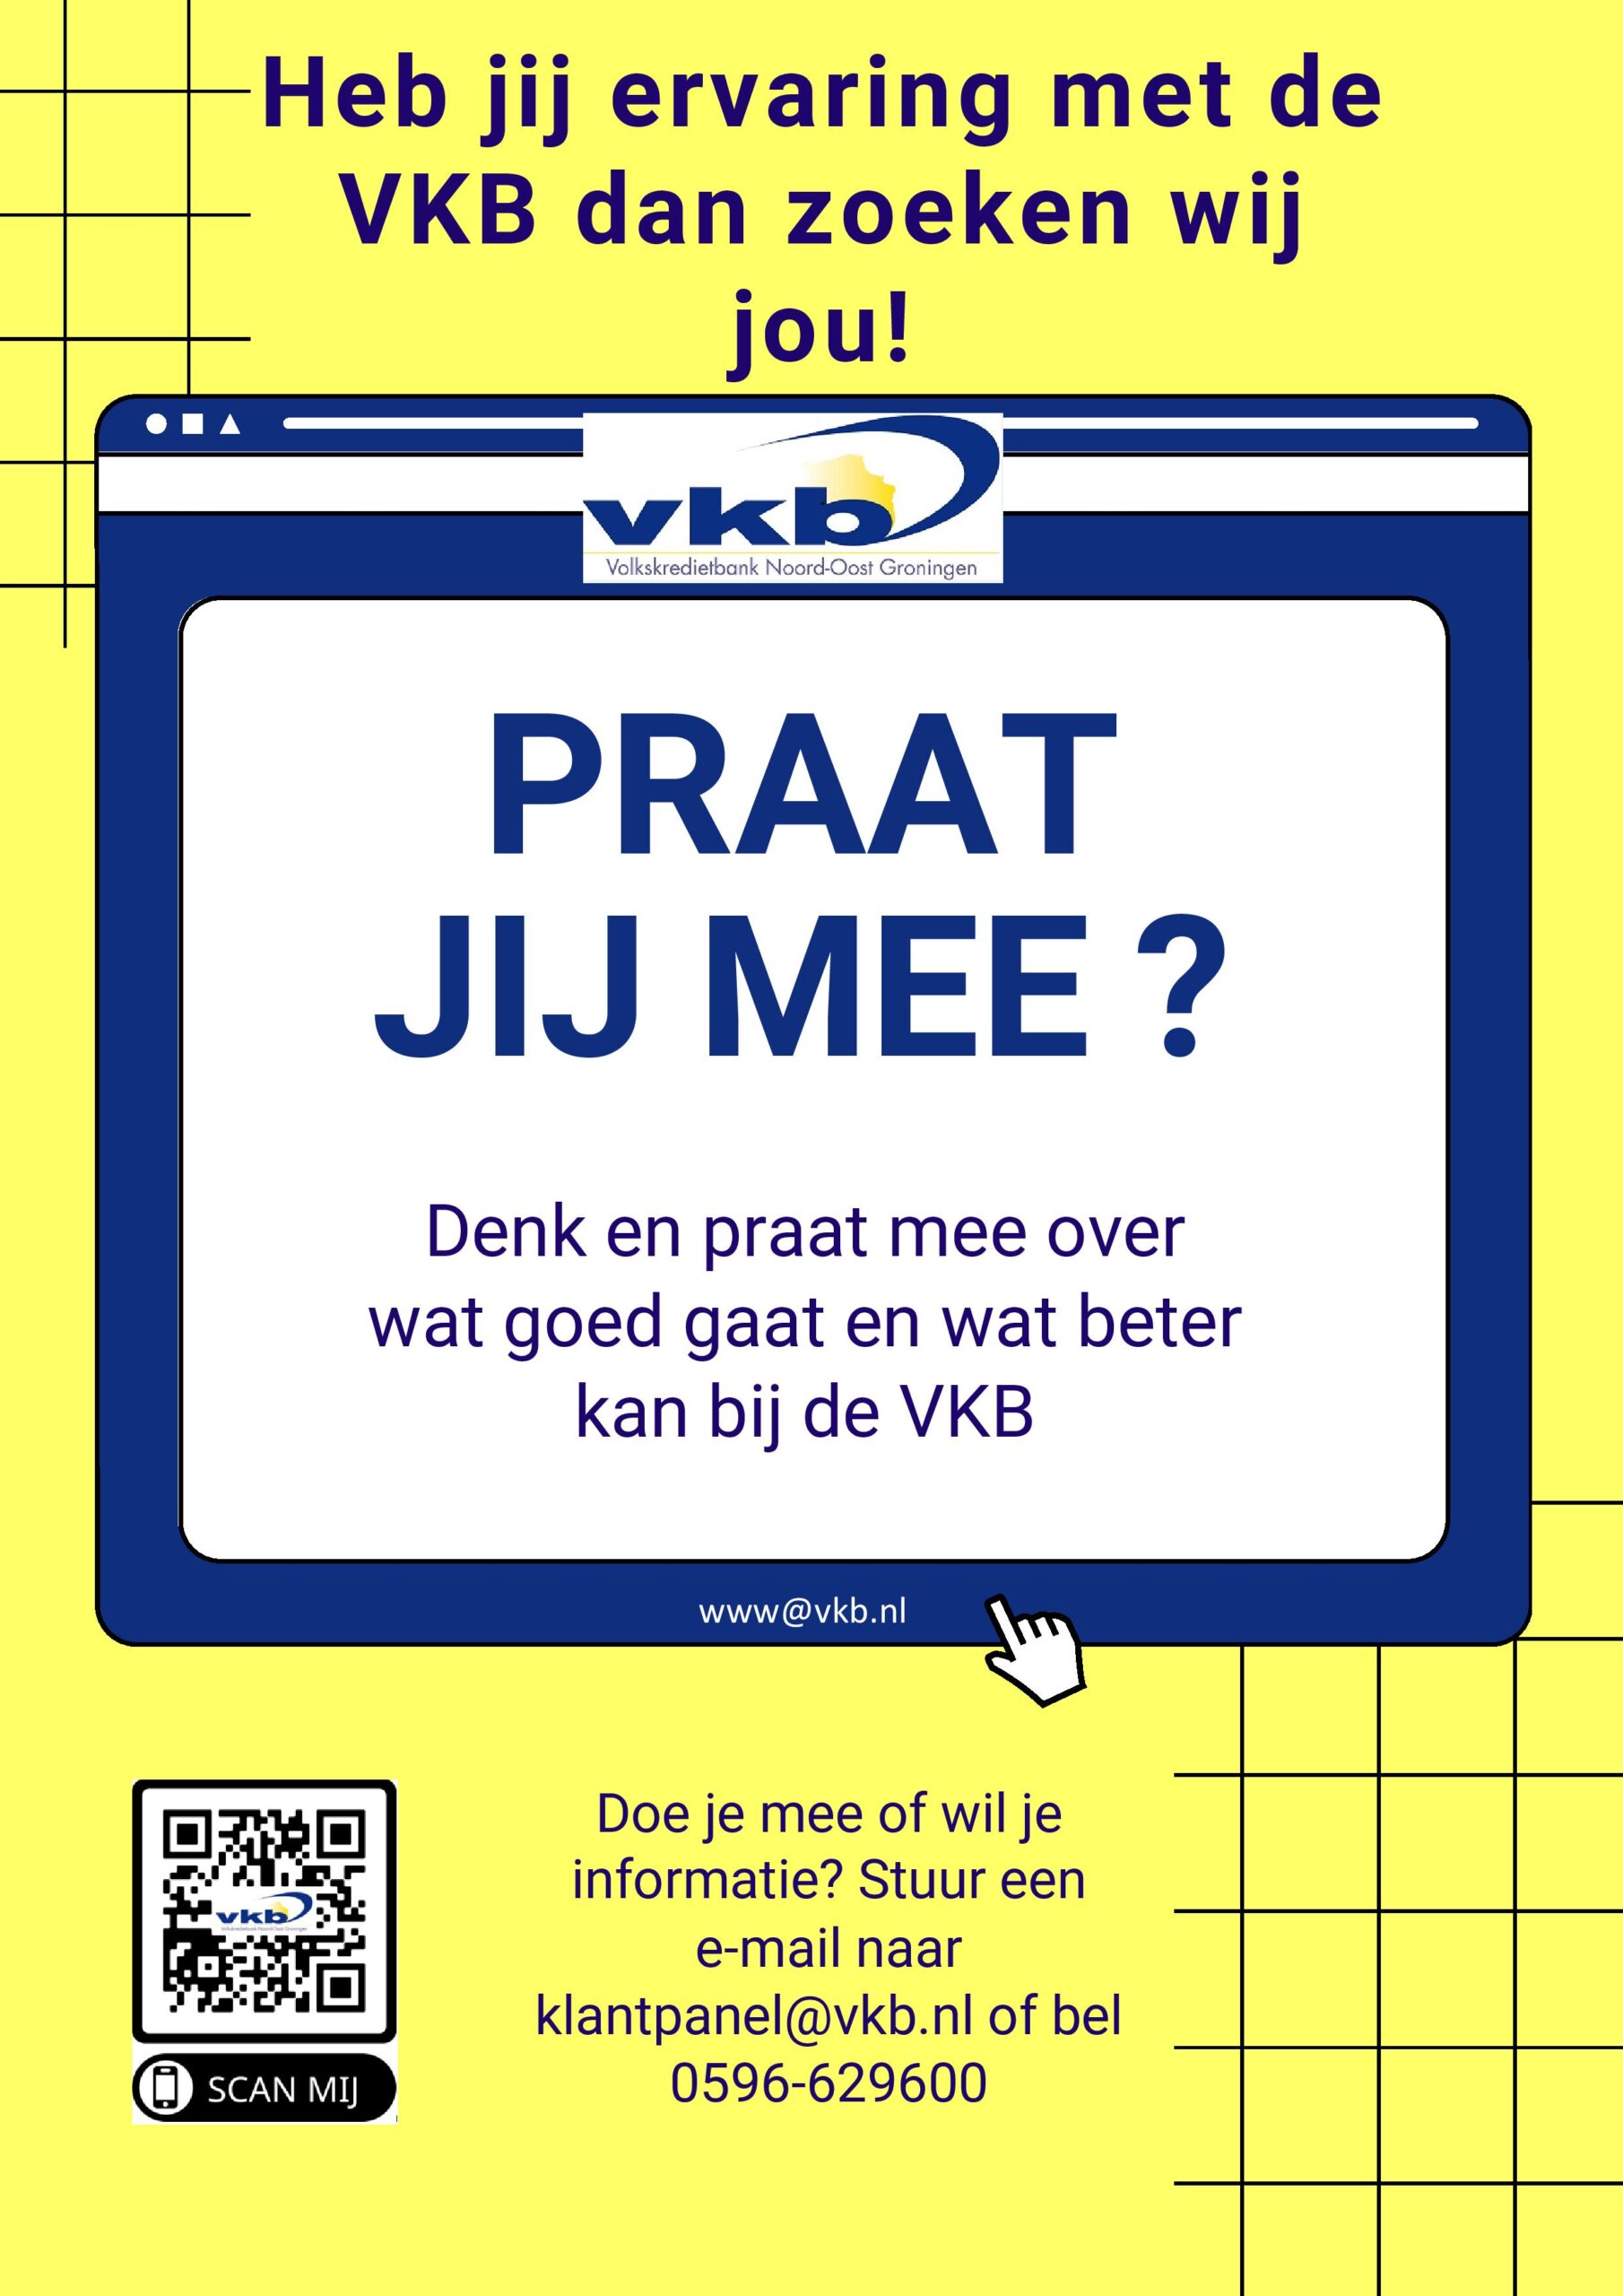 Wil je meepraten over de VKB? Mail dan klantpanel@vkb.nl of bel 0596629600.